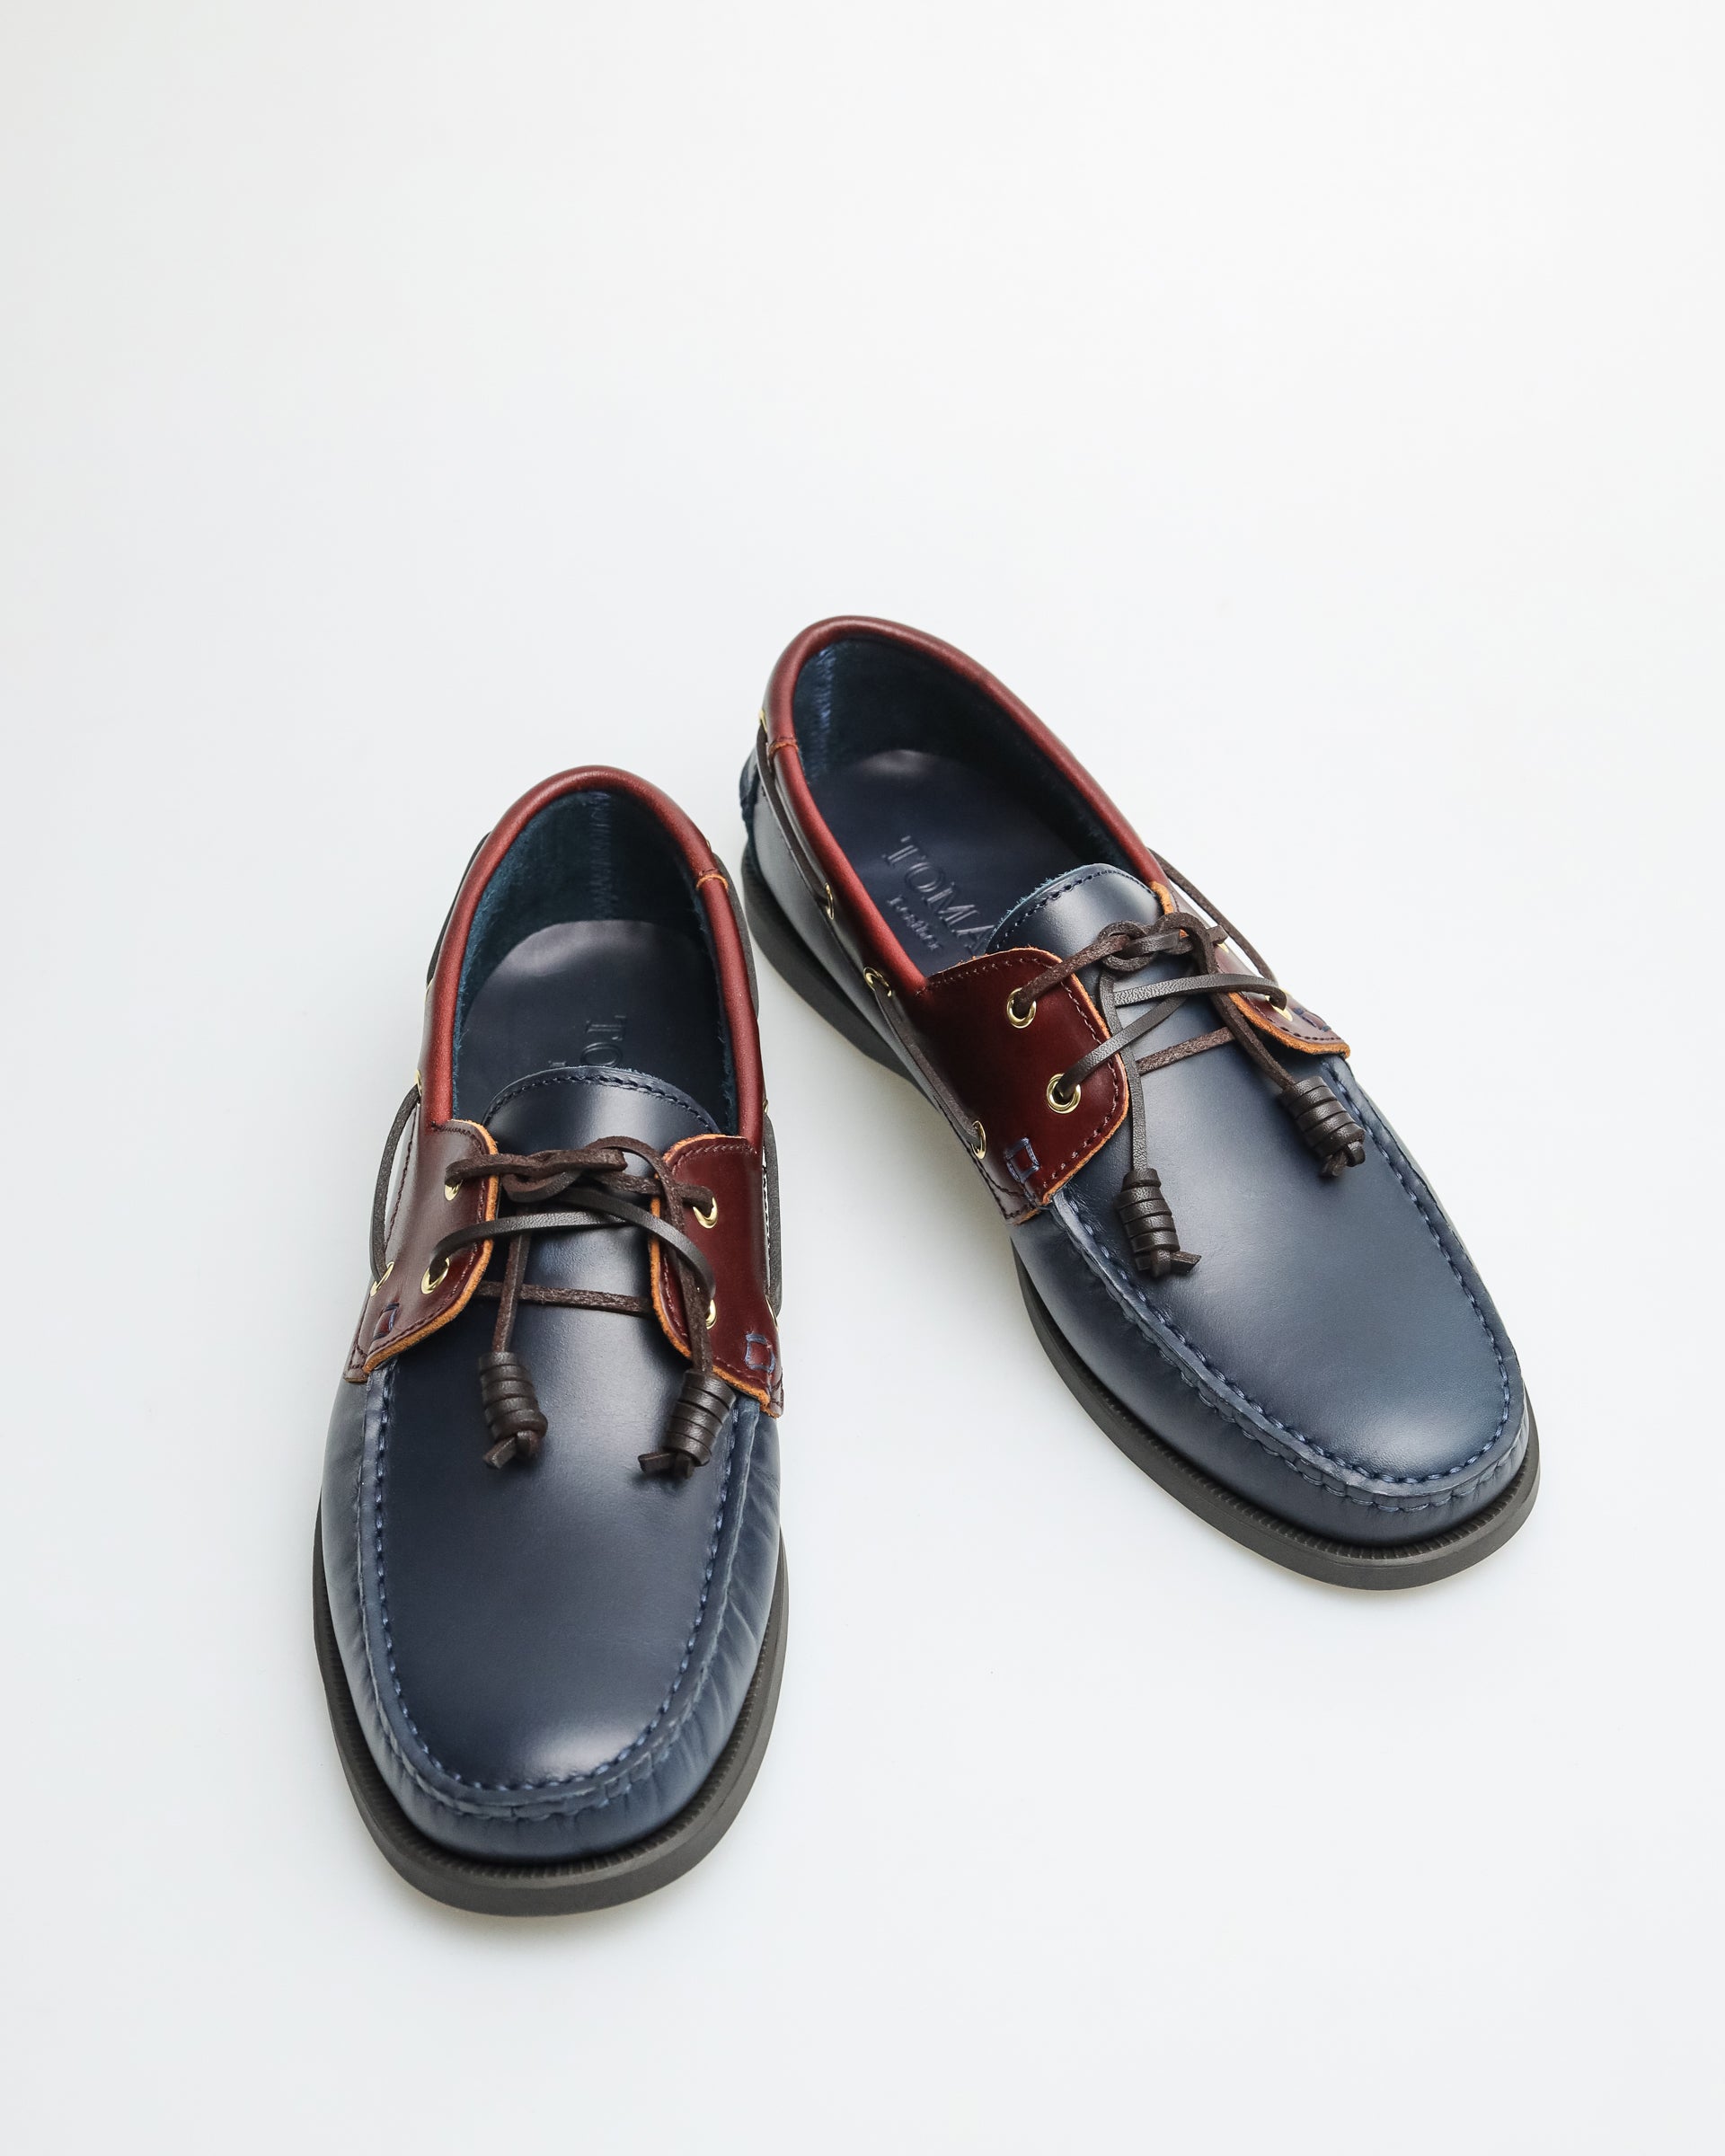 Tomaz C328 Men's Leather Boat Shoes (Navy/Wine) – TOMAZ